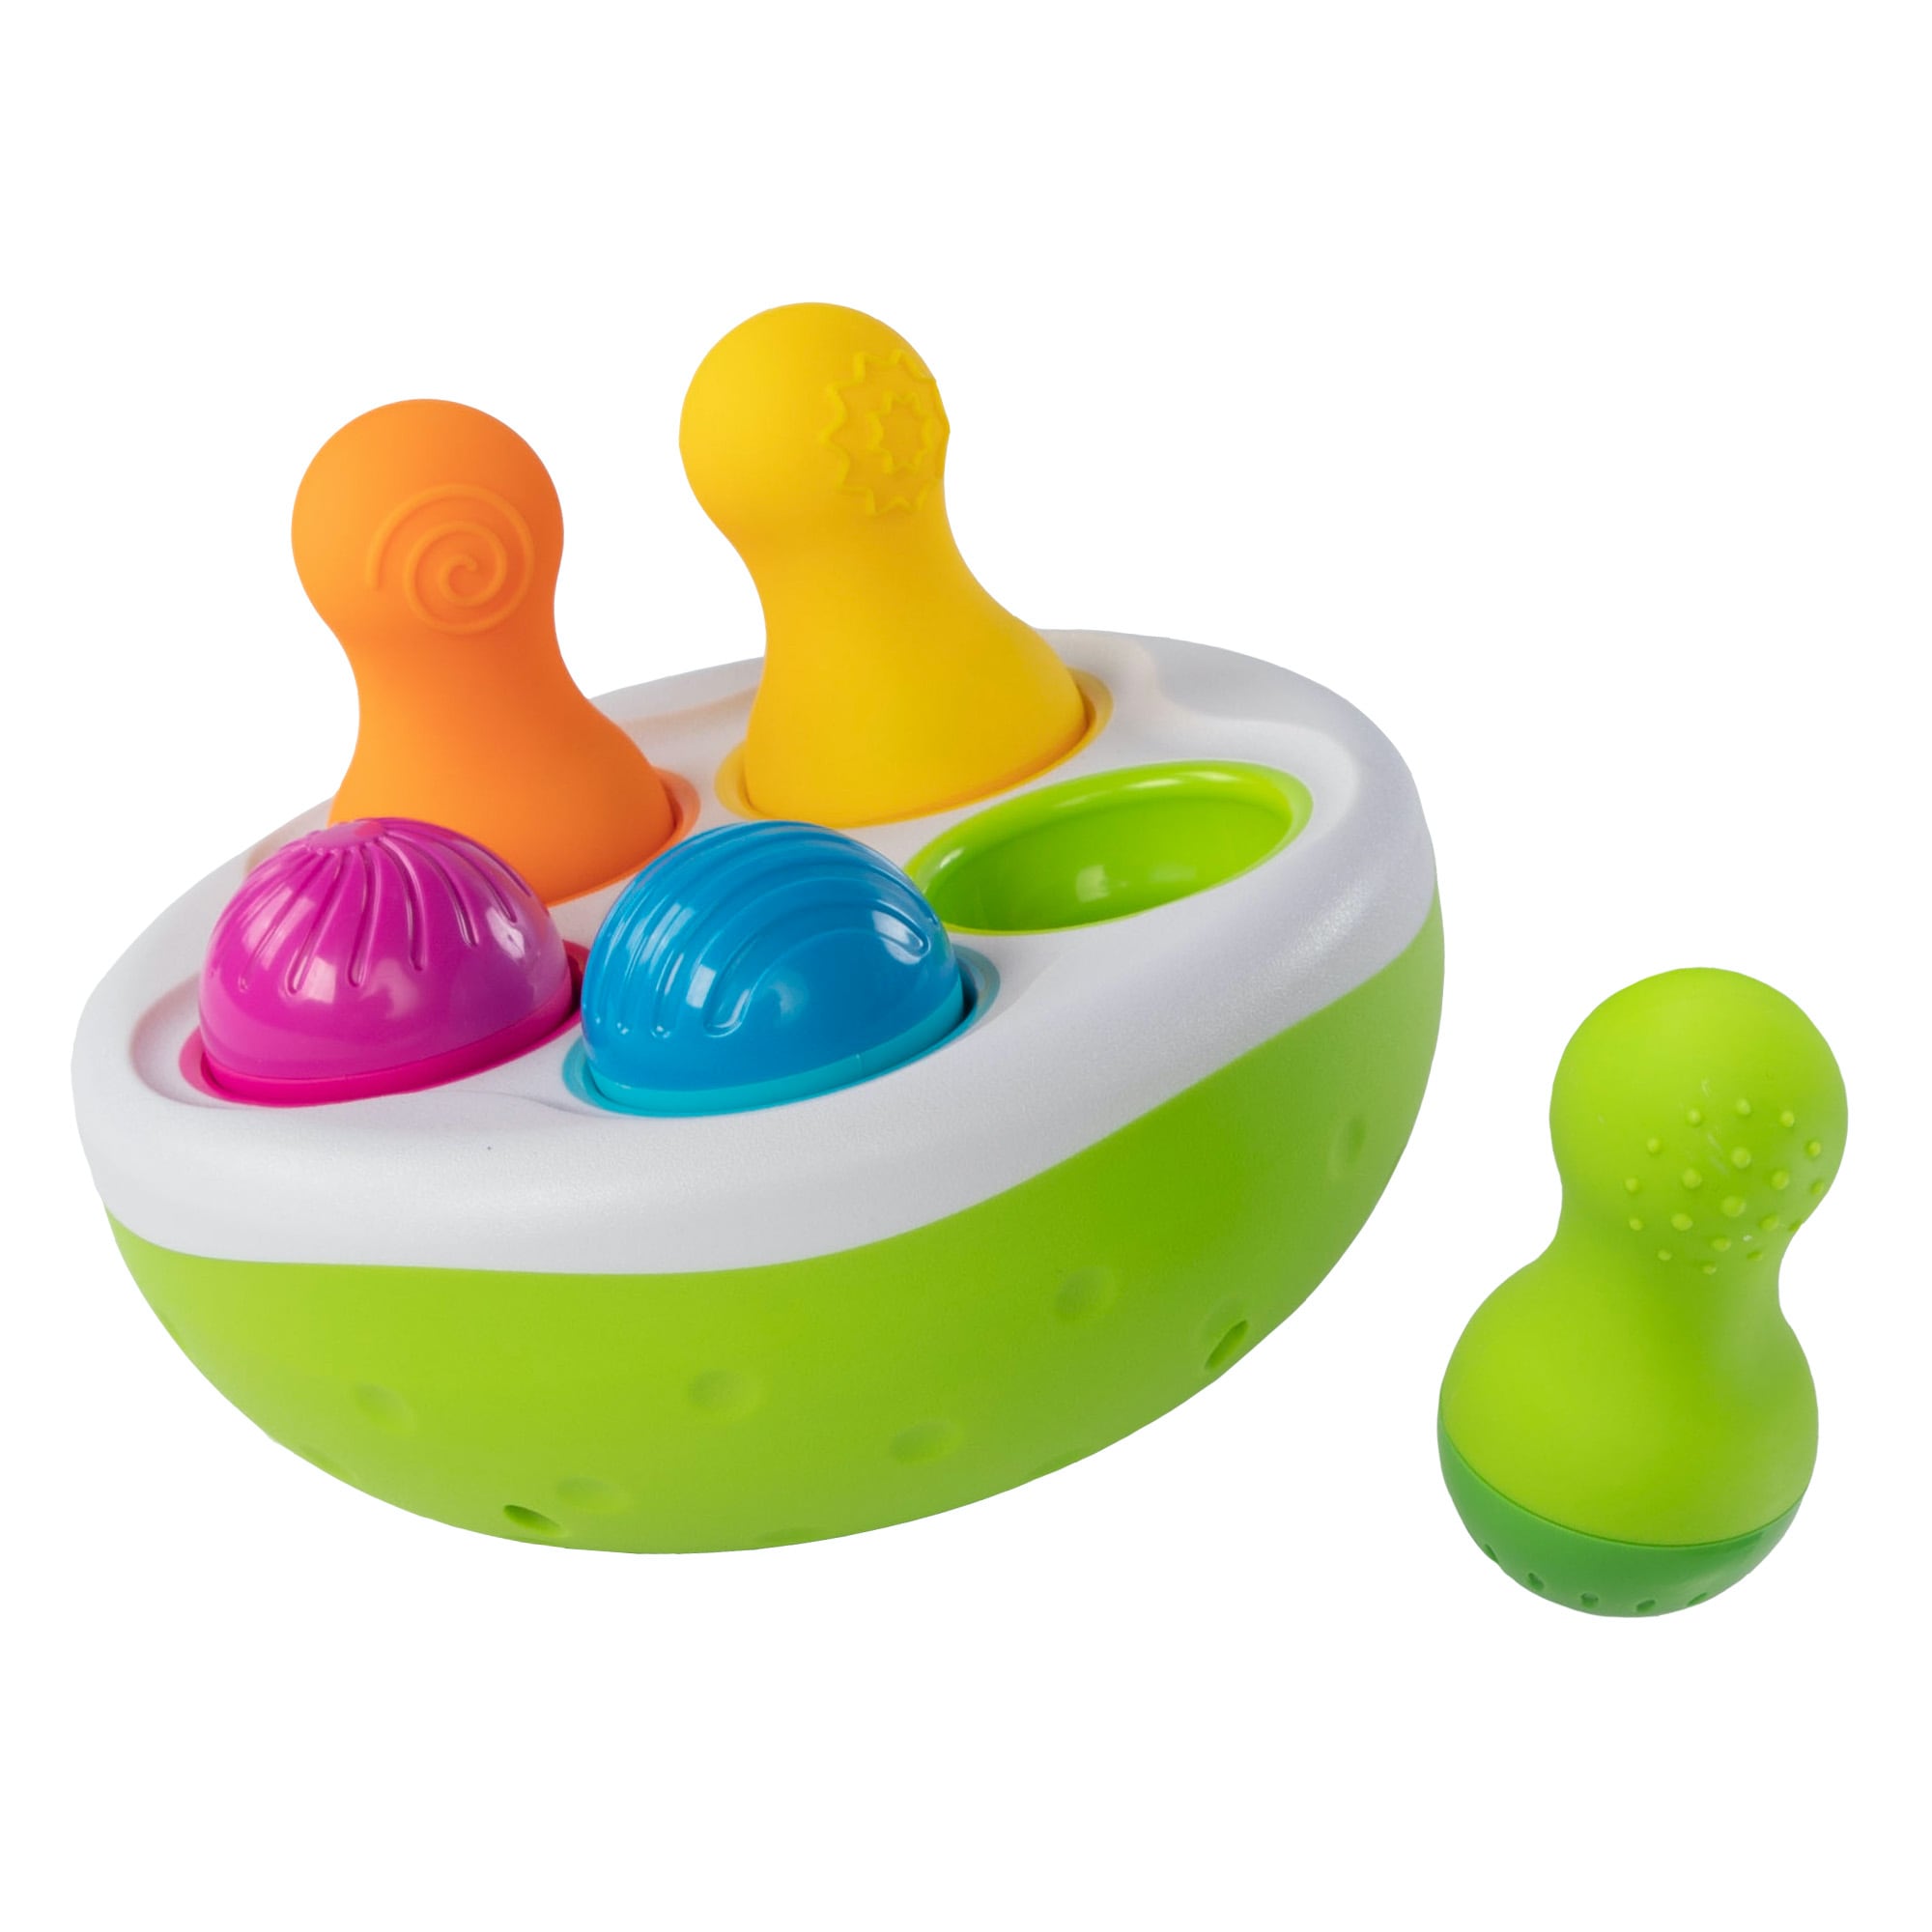 Fat Brain Toys - sorter kolorowe Wańki Wstańki SpinnyPins